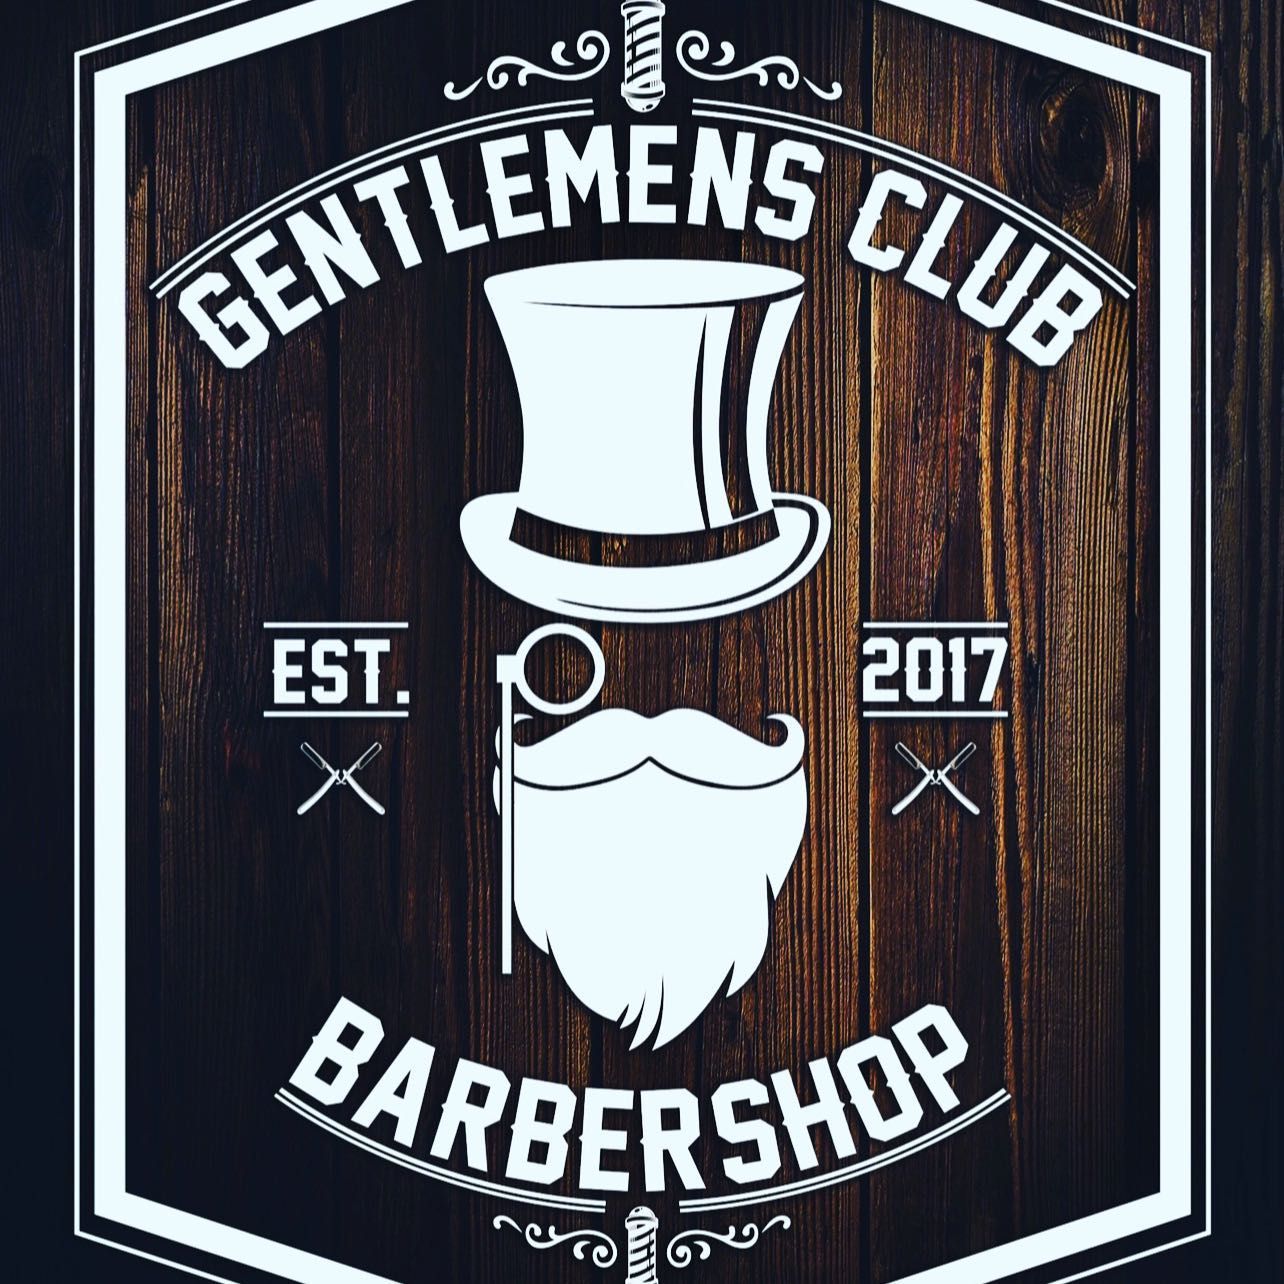 GENTLEMENS Club Barbershop, 846 N main St, Porterville, 93257